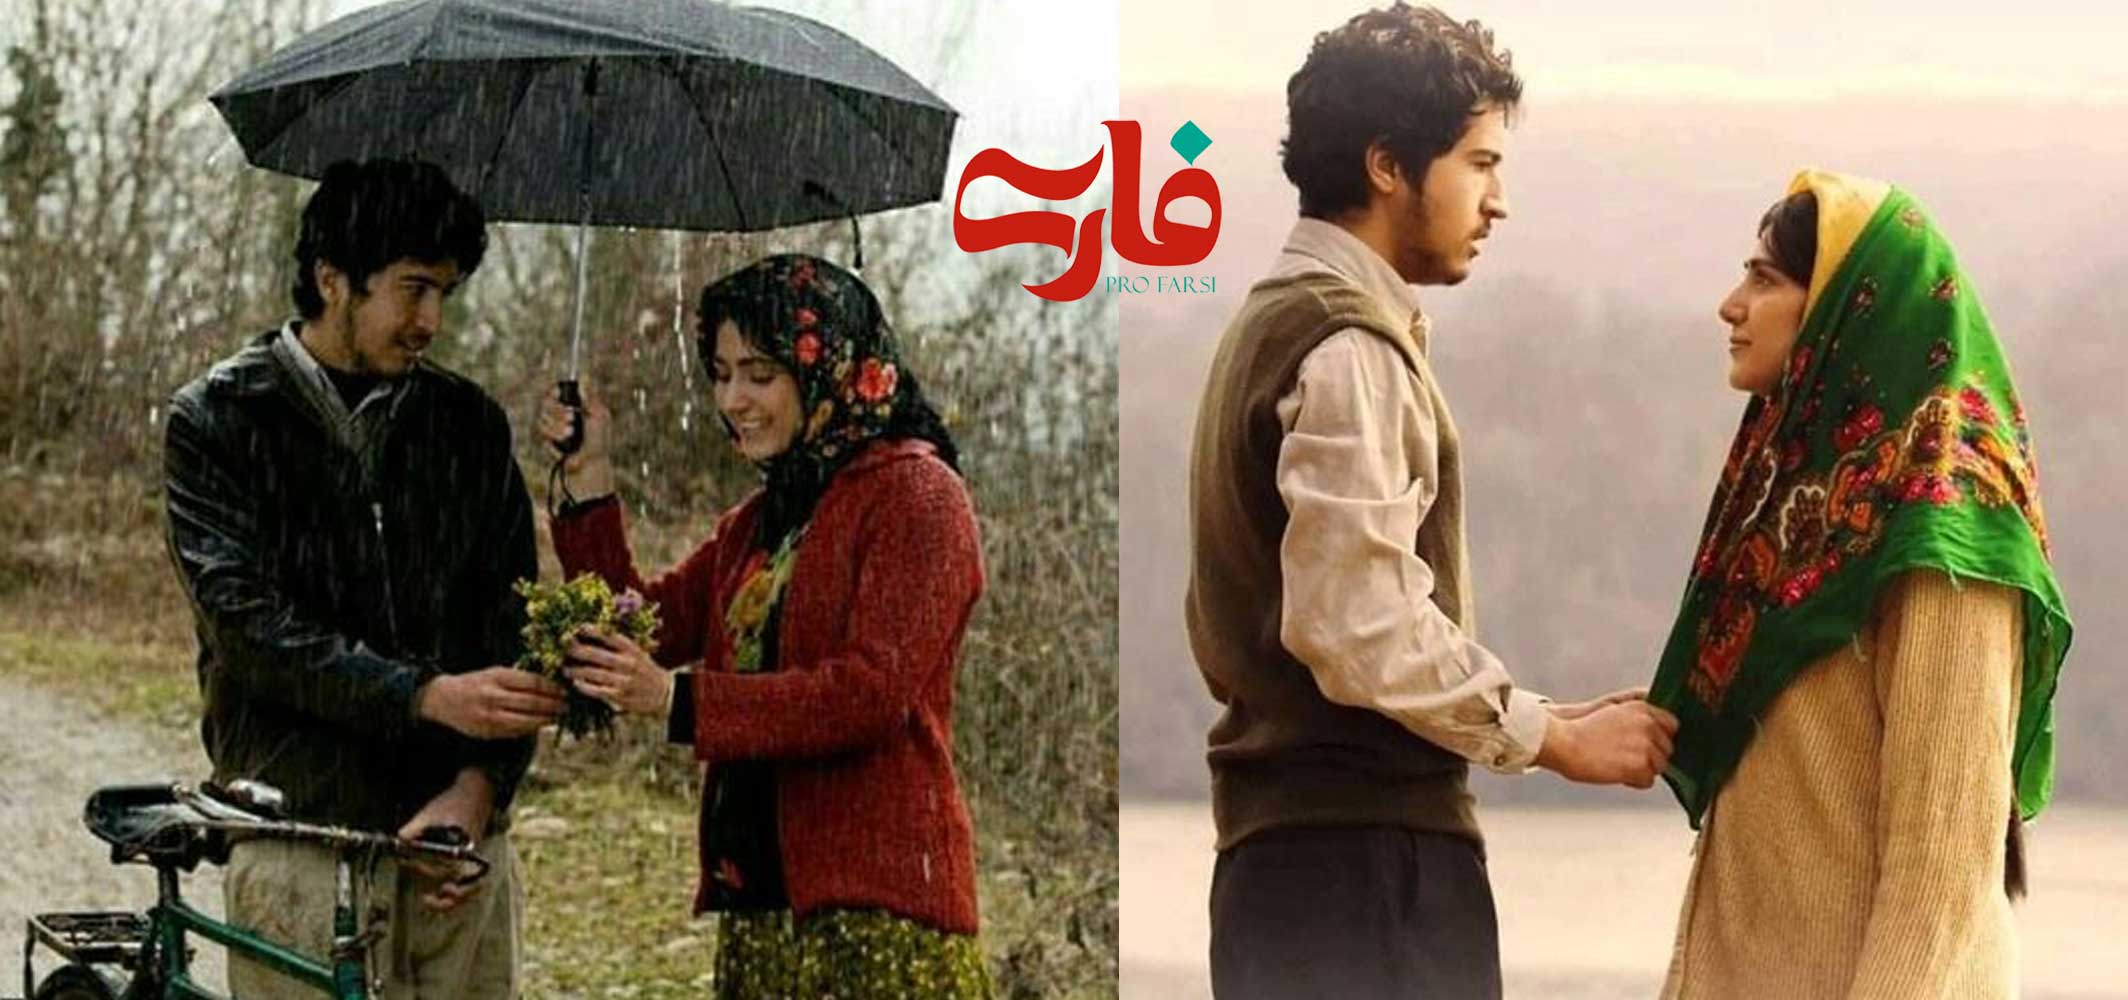 How to Say I Love You in Farsi: Expressing Love in Farsi